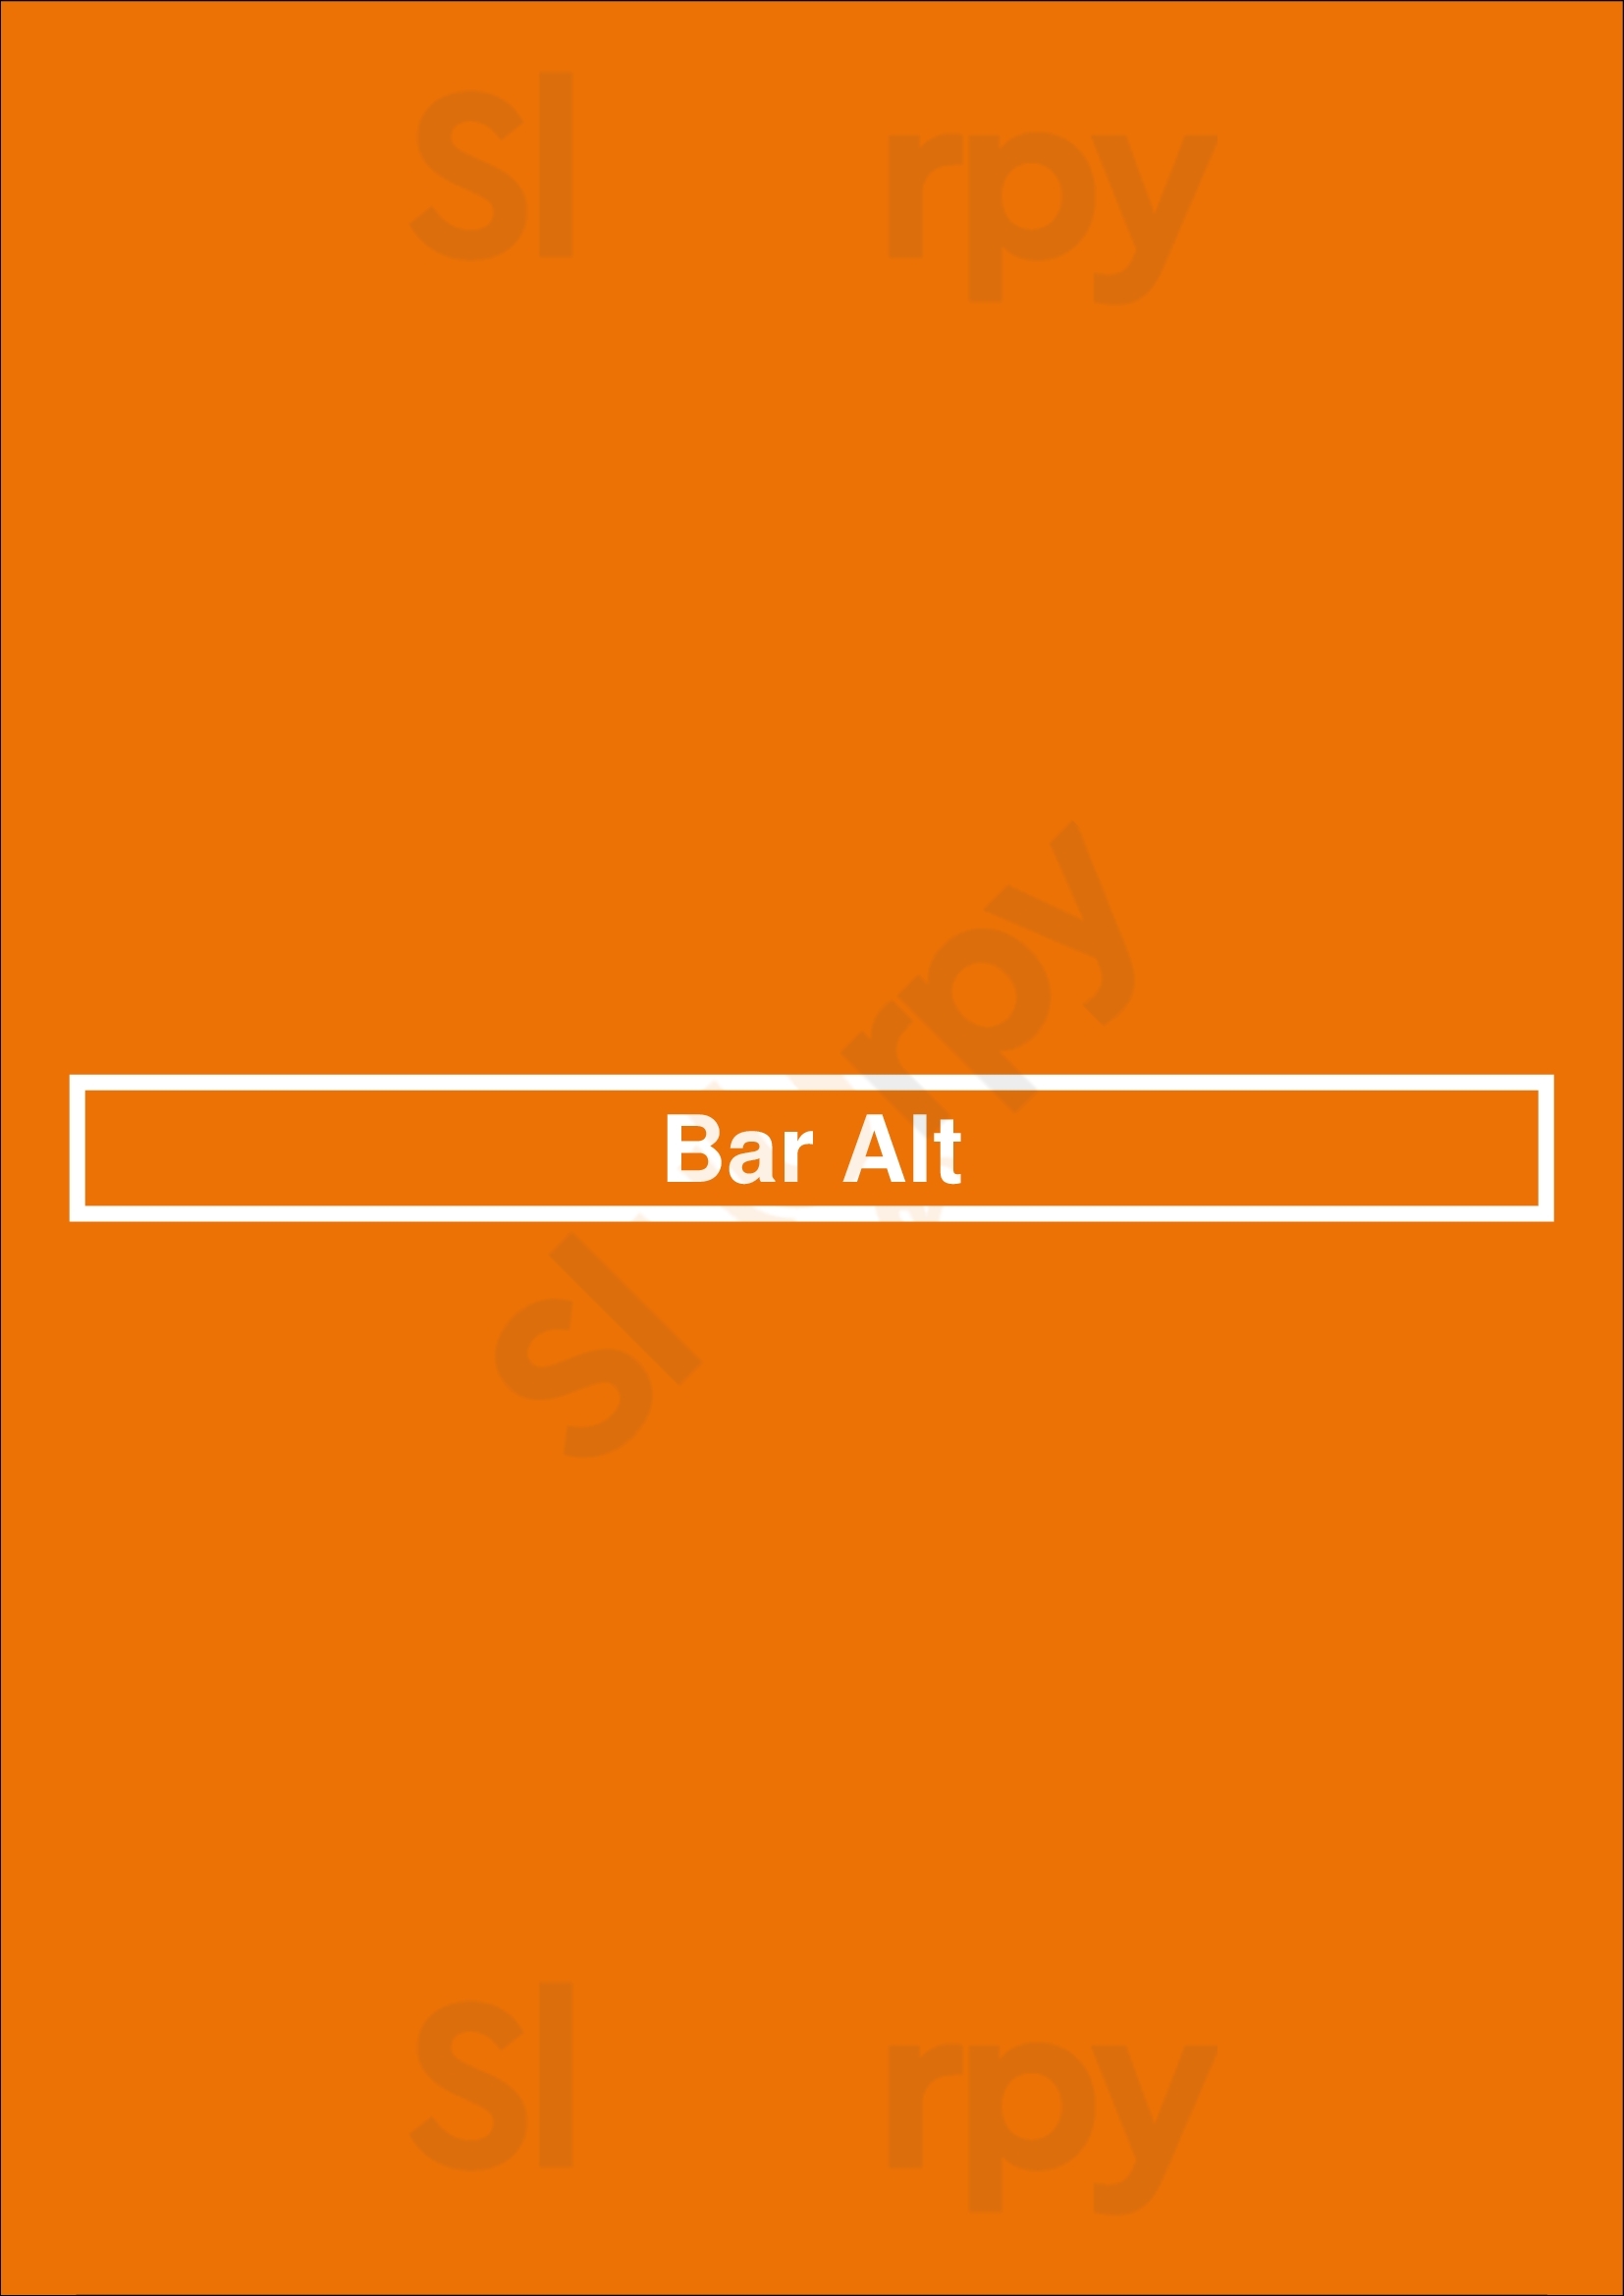 Bar Alt Amsterdam Menu - 1